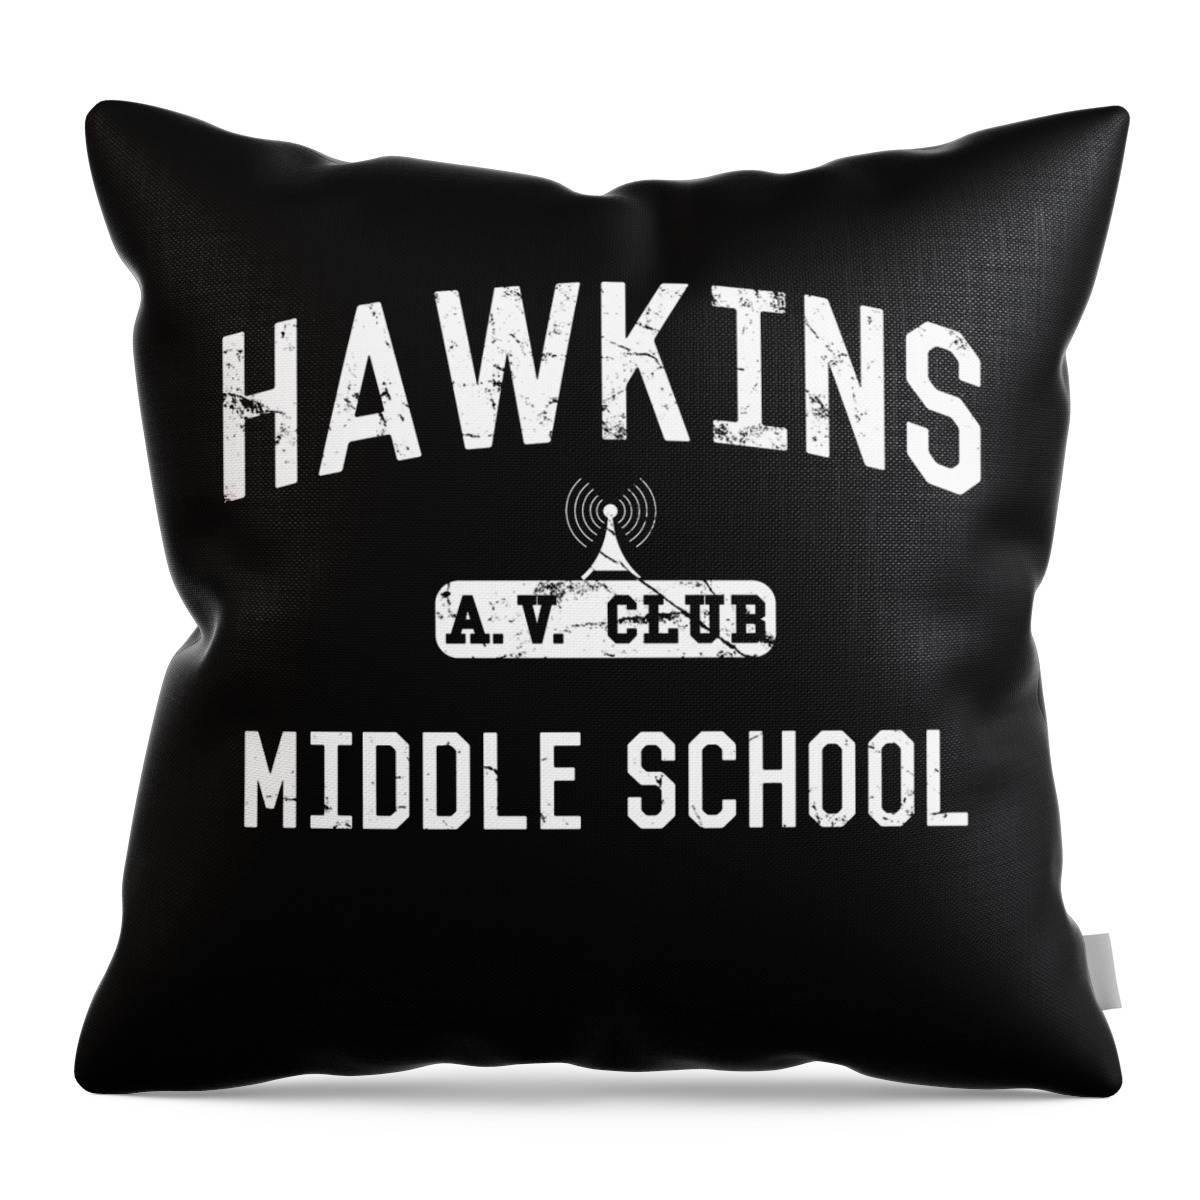 Funny Throw Pillow featuring the digital art Hawkins Middle School Av Club by Flippin Sweet Gear